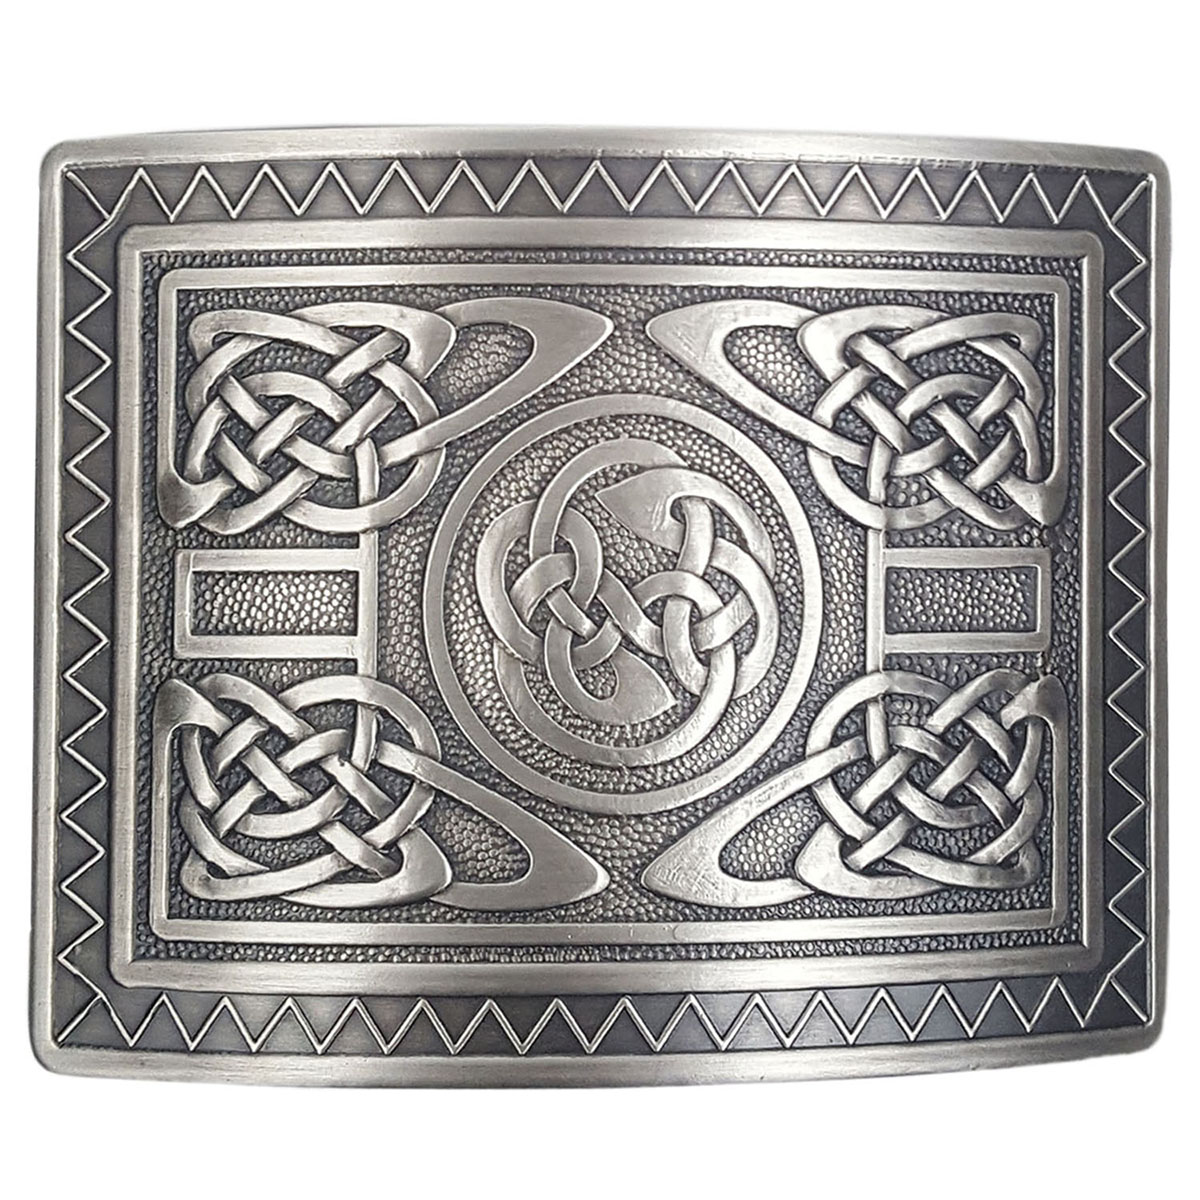 Swirl Celtic Knot Work Belt Buckle Antique Finish/Scottish Kilt Belts Buckles 